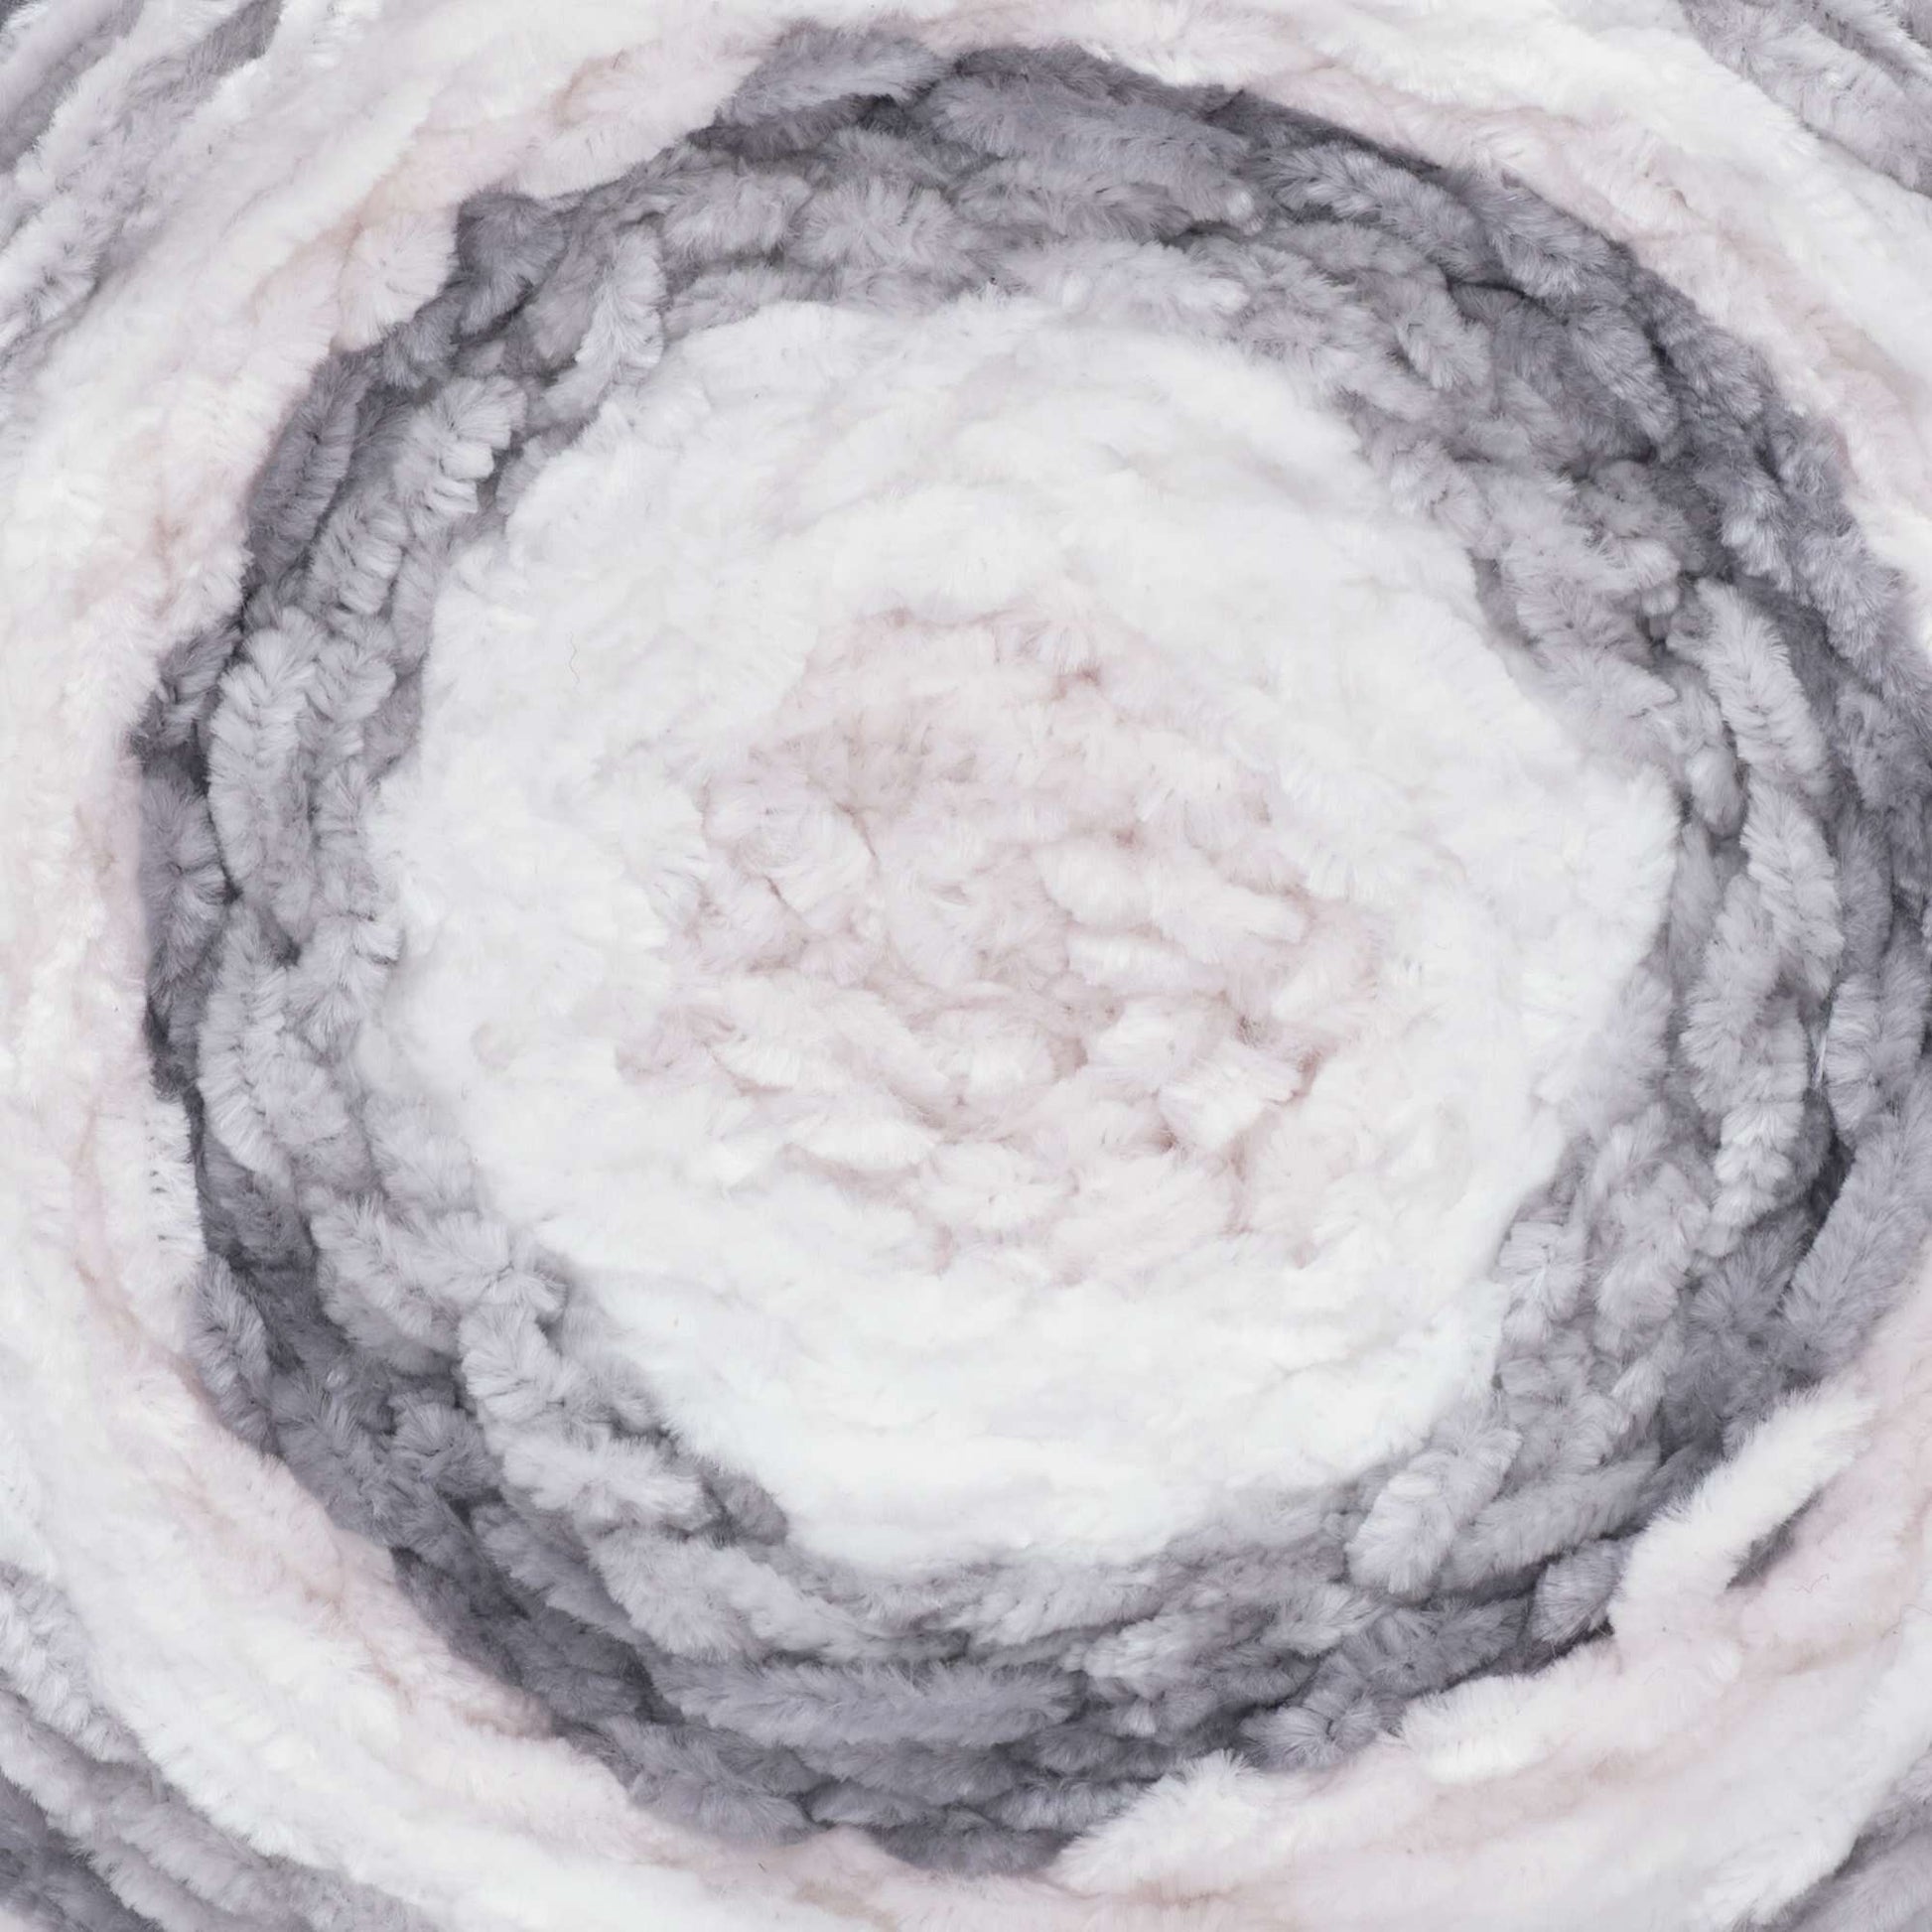 Bernat Baby Velvet Stripes Yarn - Discontinued Shades Snowy Mountain